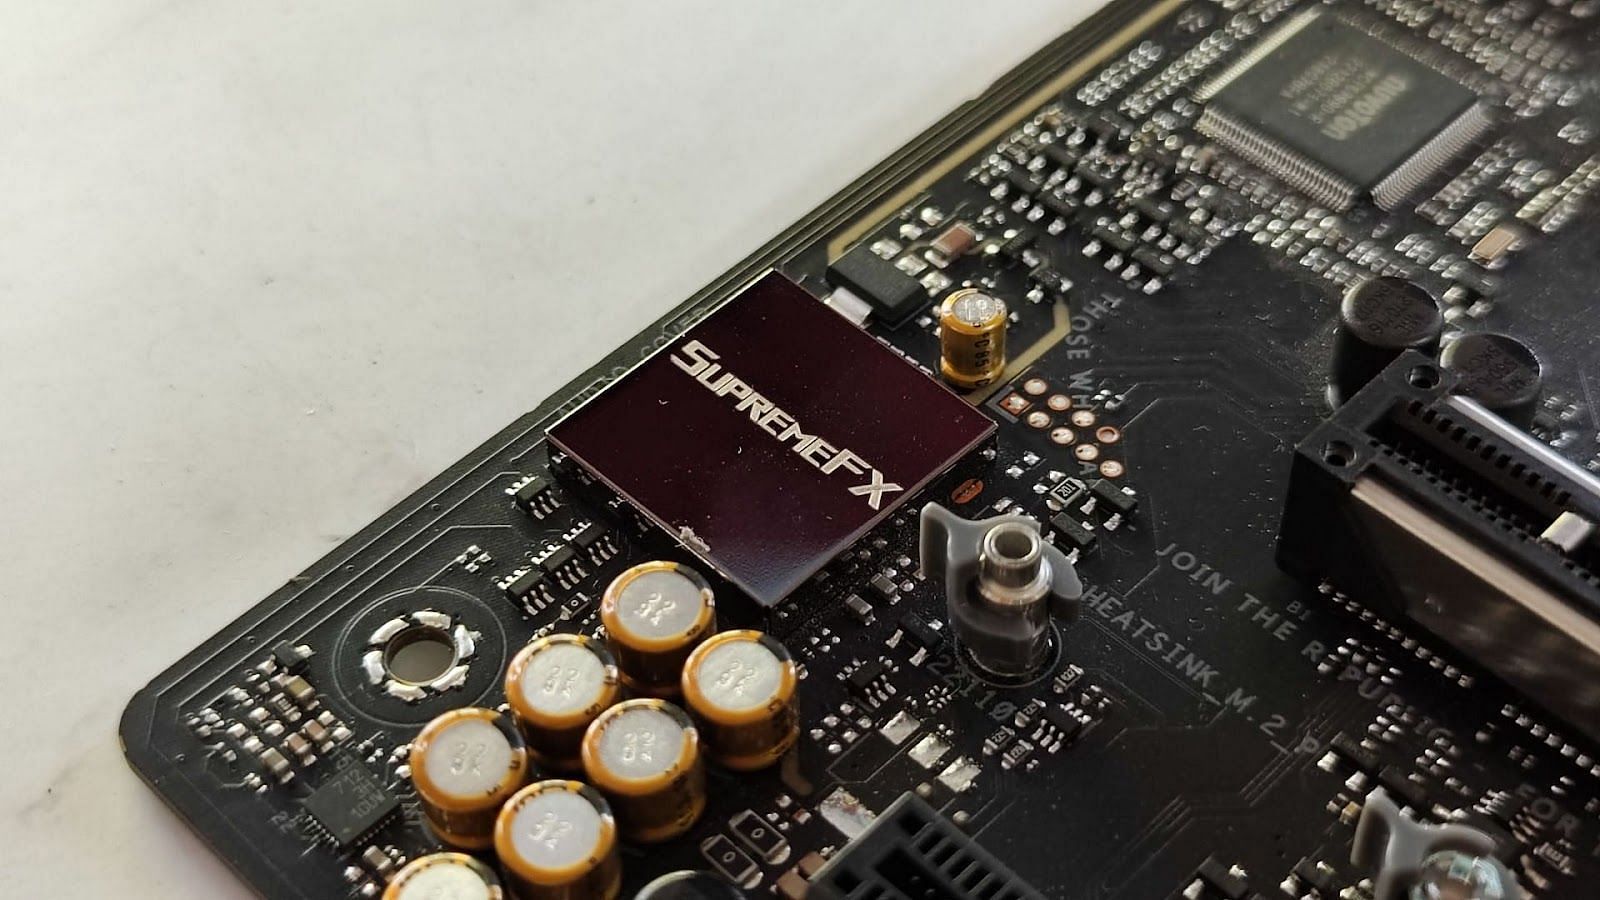 The SupremeFX-branded audio chipset (Image via Sportskeeda)